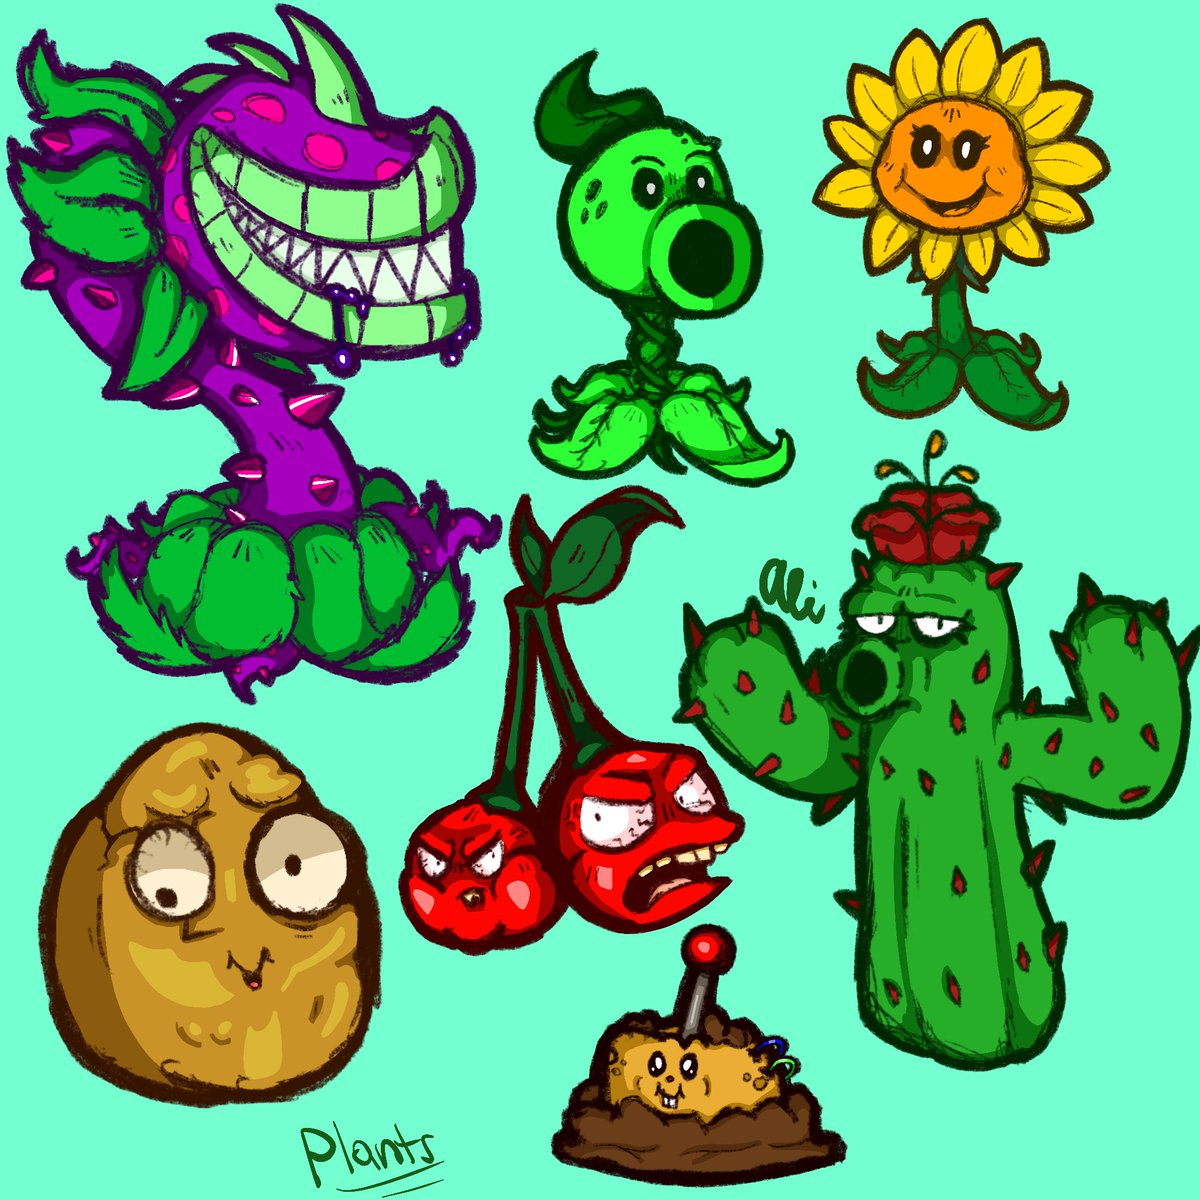 Plants 🌱 
.
.
.
#plants #zombies #plantsvszombies #plantsvszombies2 #peashooter #chomper #sunflower #cactus #cherrybomb #wallnut #potatomine #art #digitalart #procreate